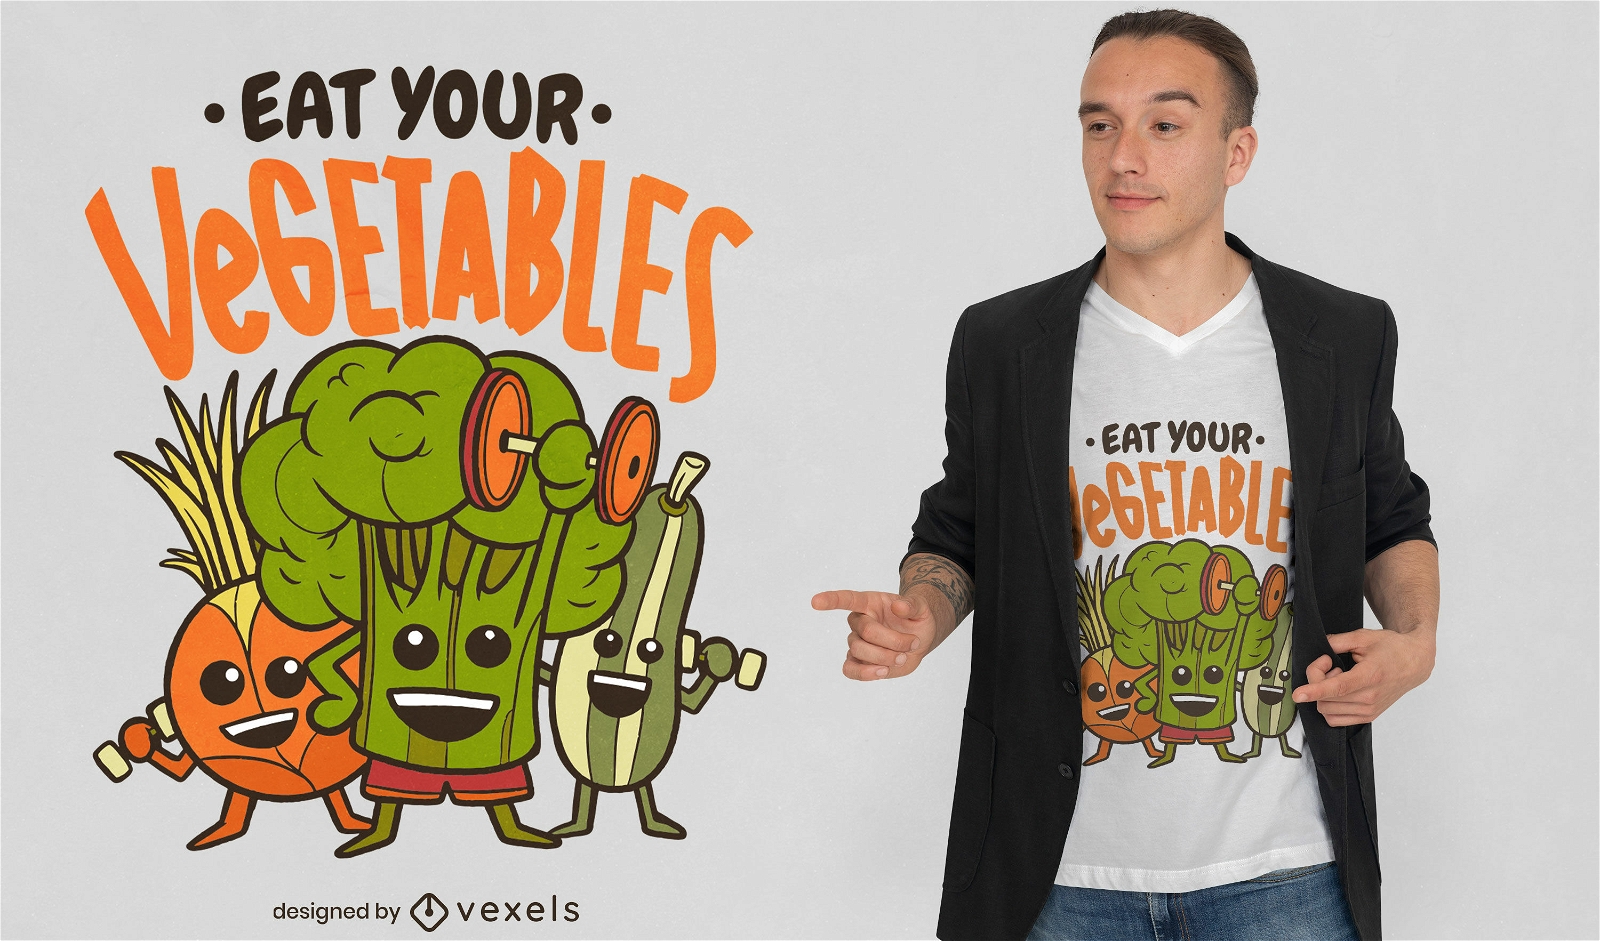 Eat your vegetables vegan t-shirt design